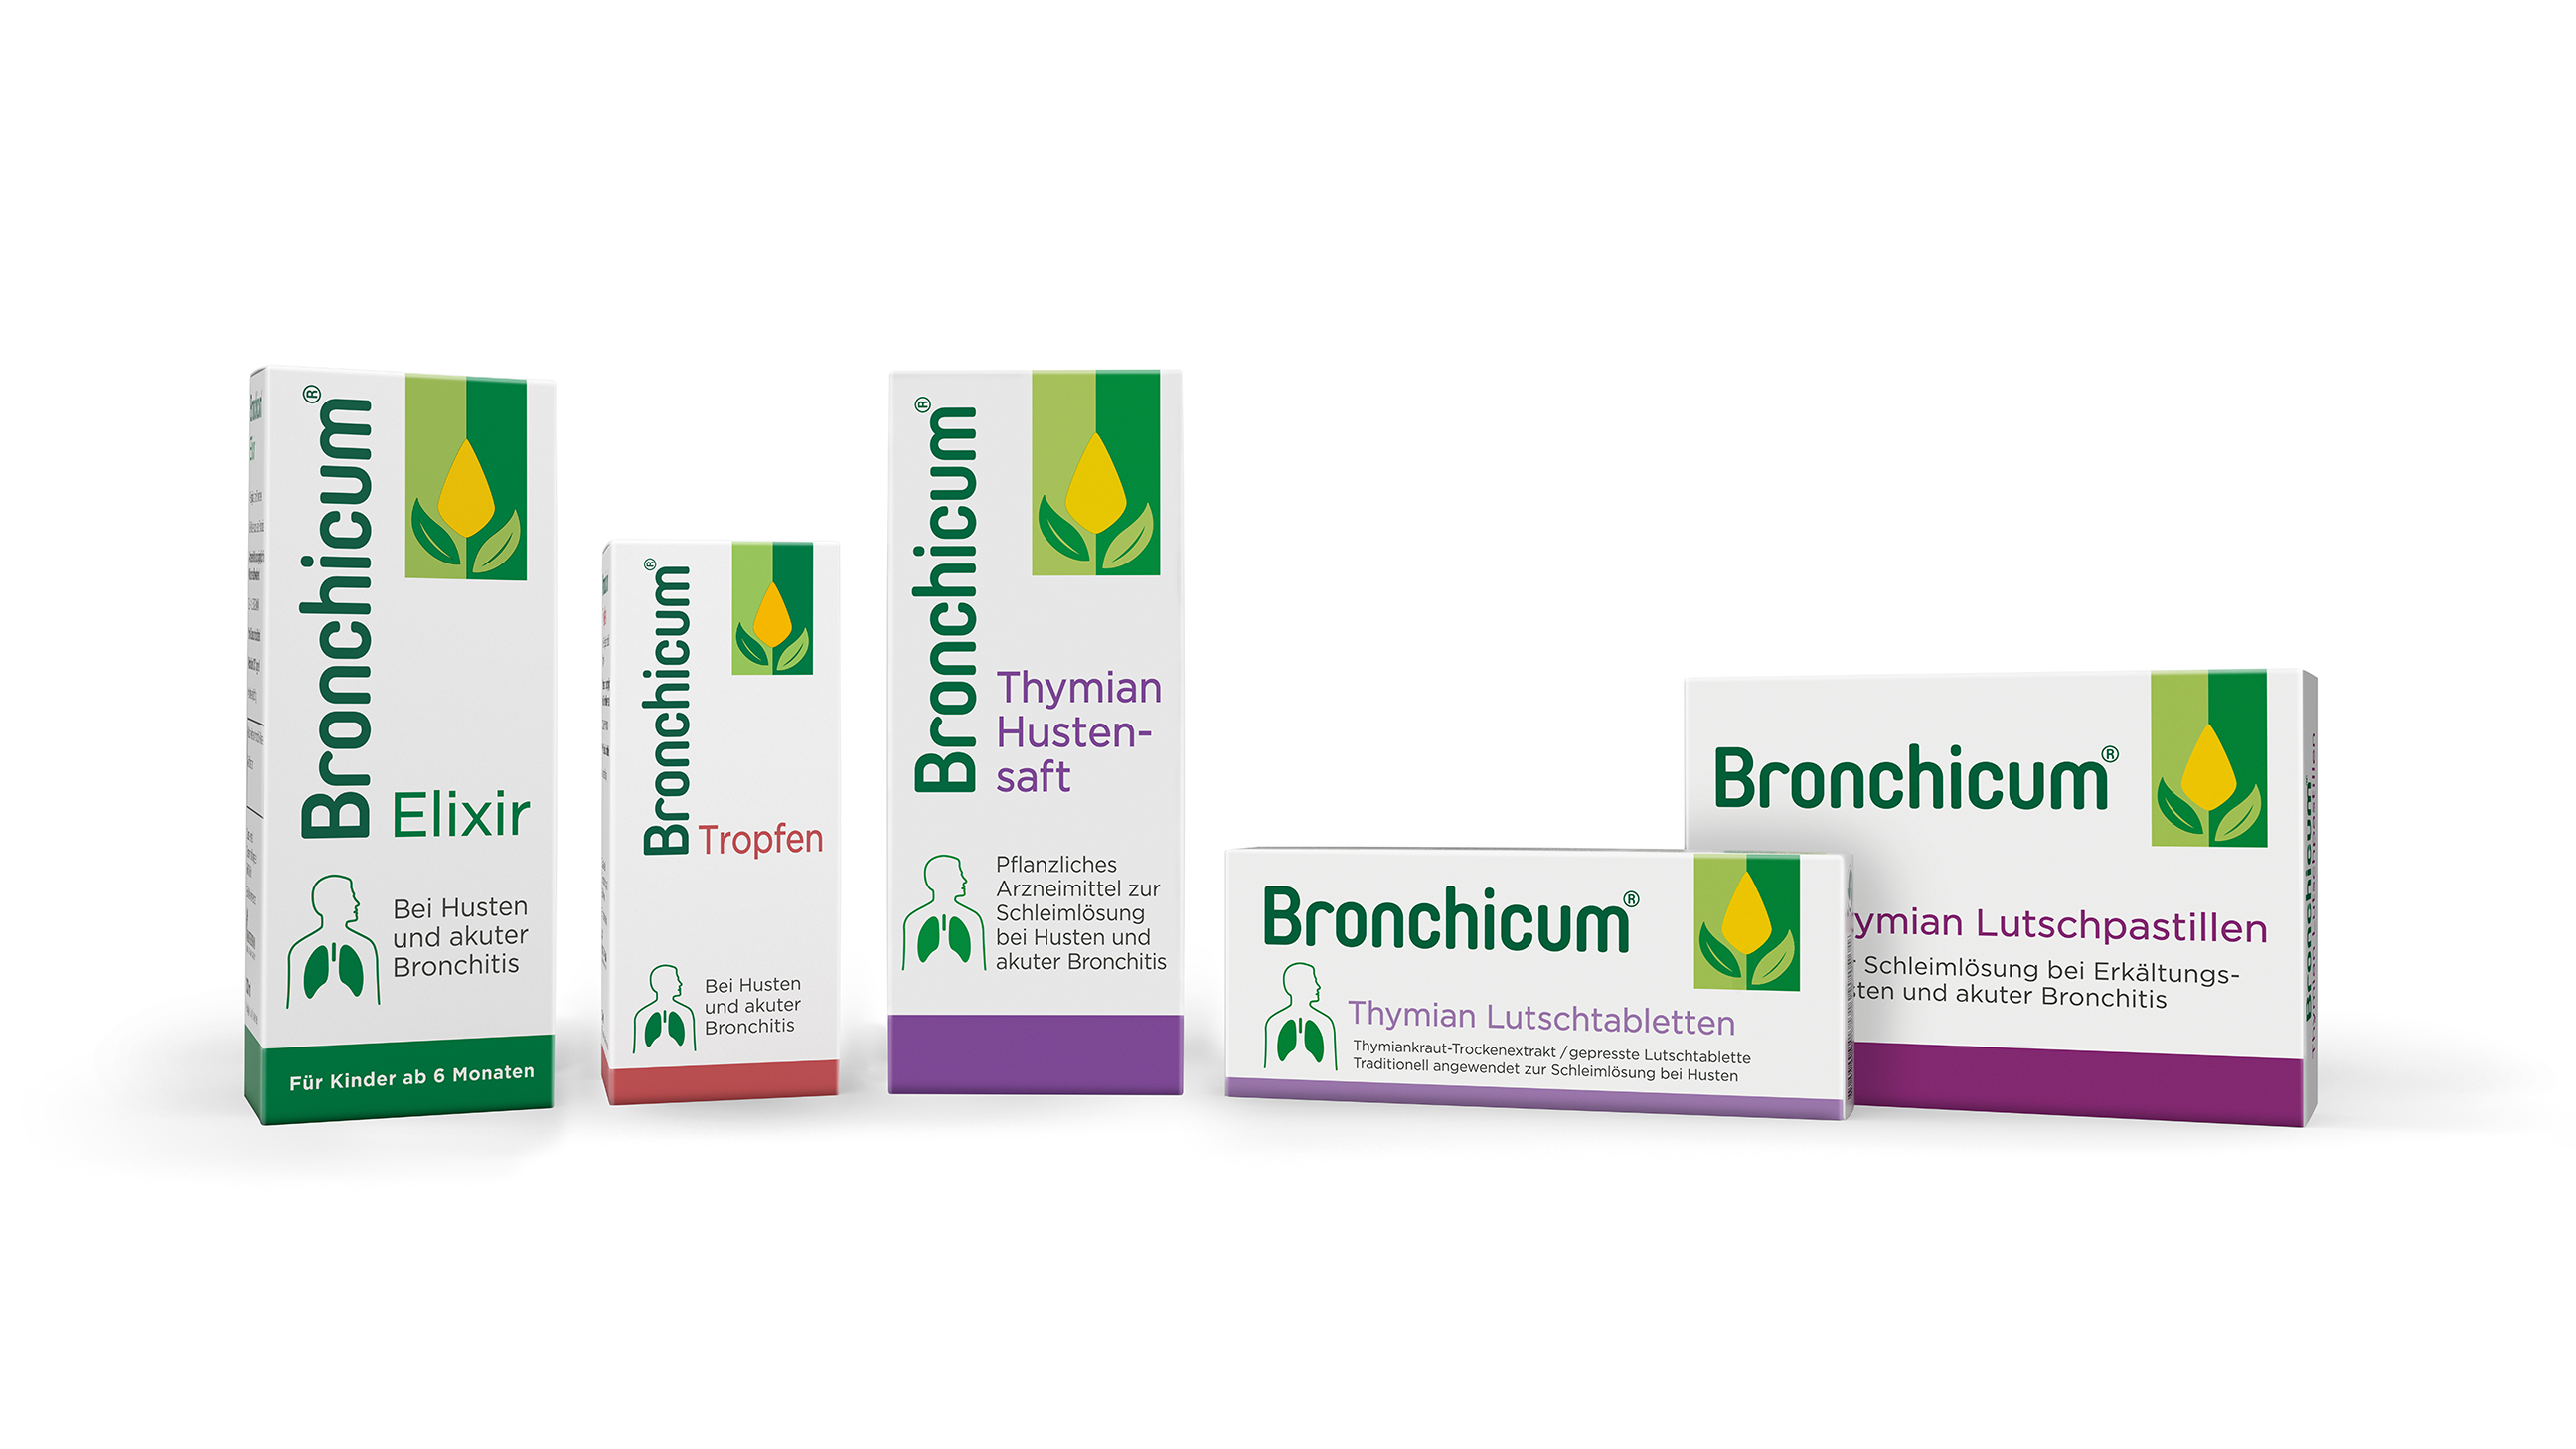 Bronchicum® Thymian Hustensaft ergänzt das bewährte Bronchicum®-Sortiment